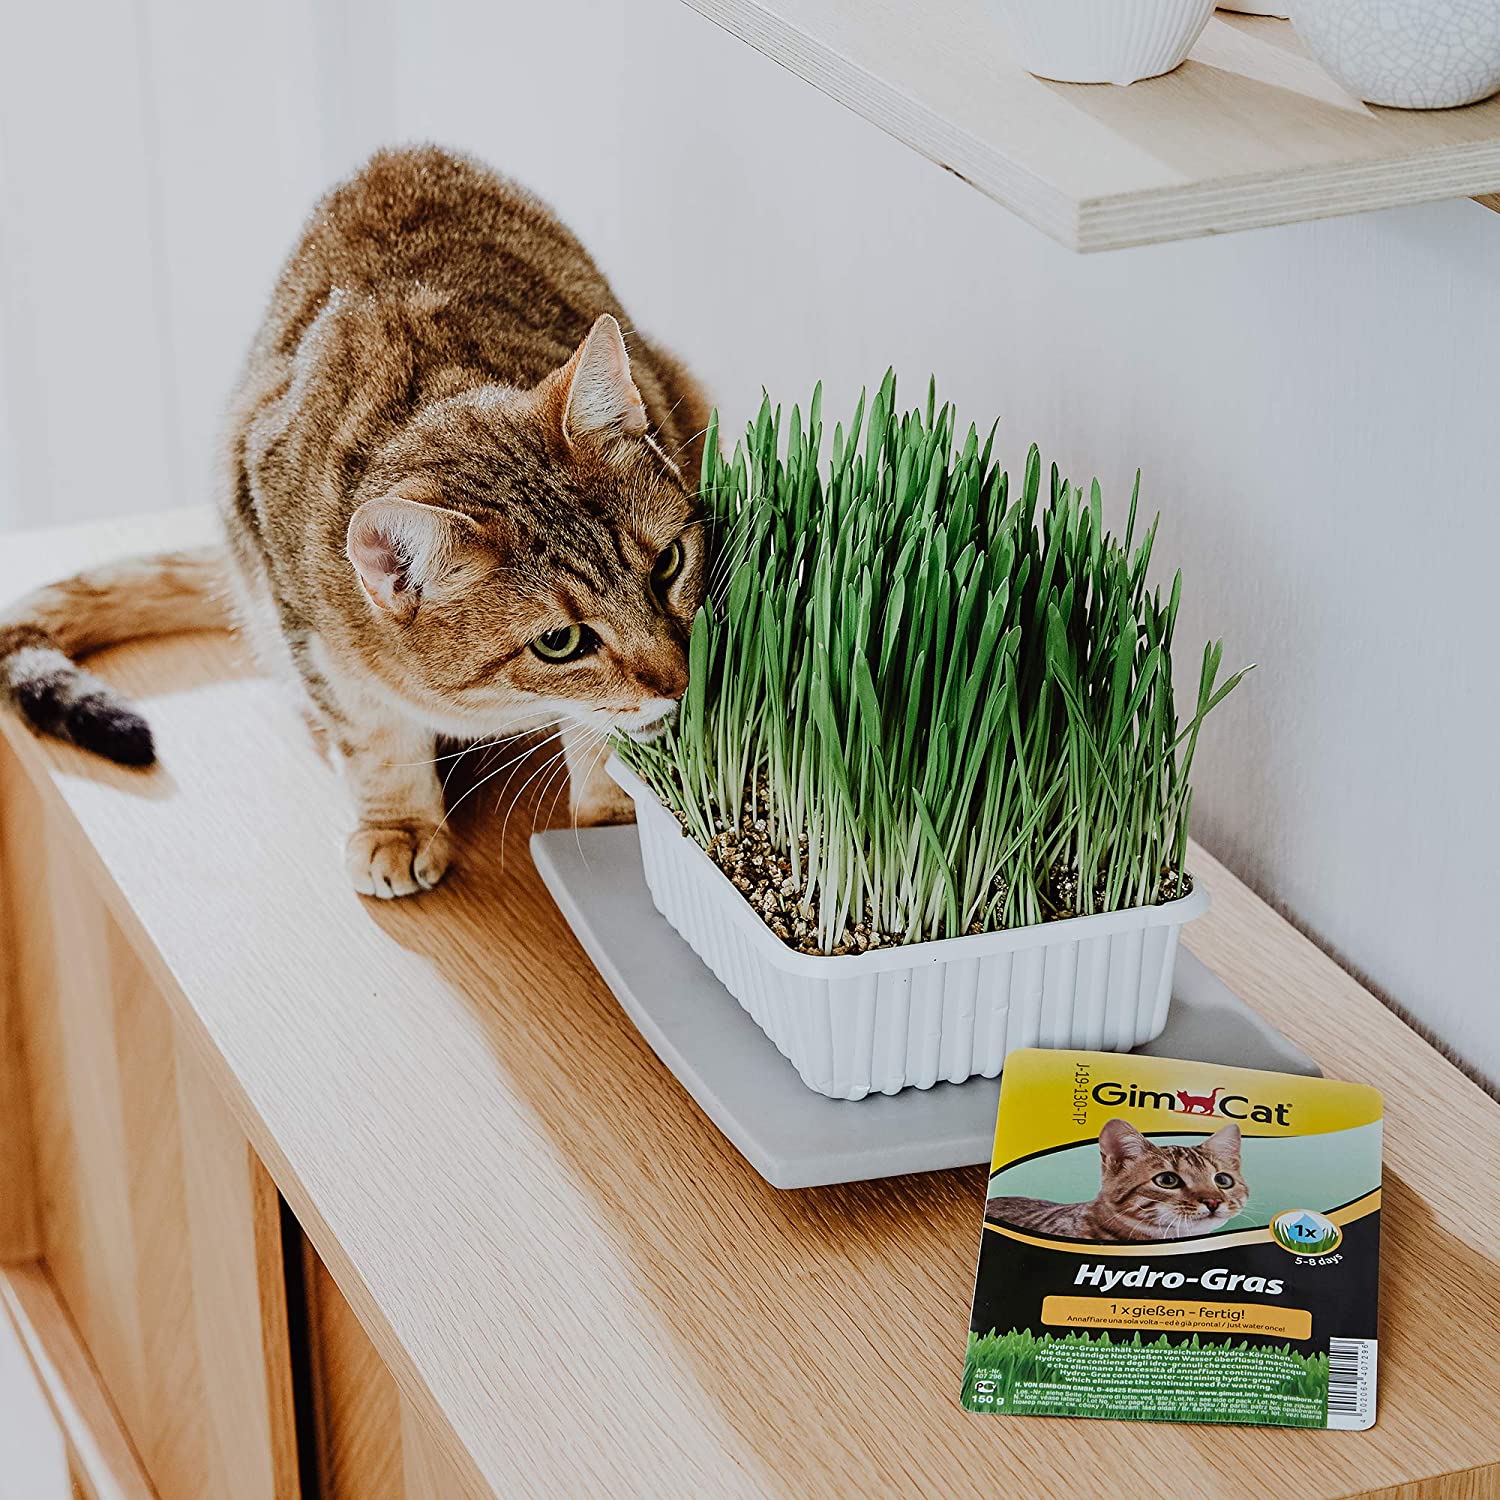  GimCat Hydro-Gras – Hierba para gatos de plantación controlada – De fácil cultivo en 5-8 días regando 1 sola vez – 1 bandeja (1 x 150 g) 